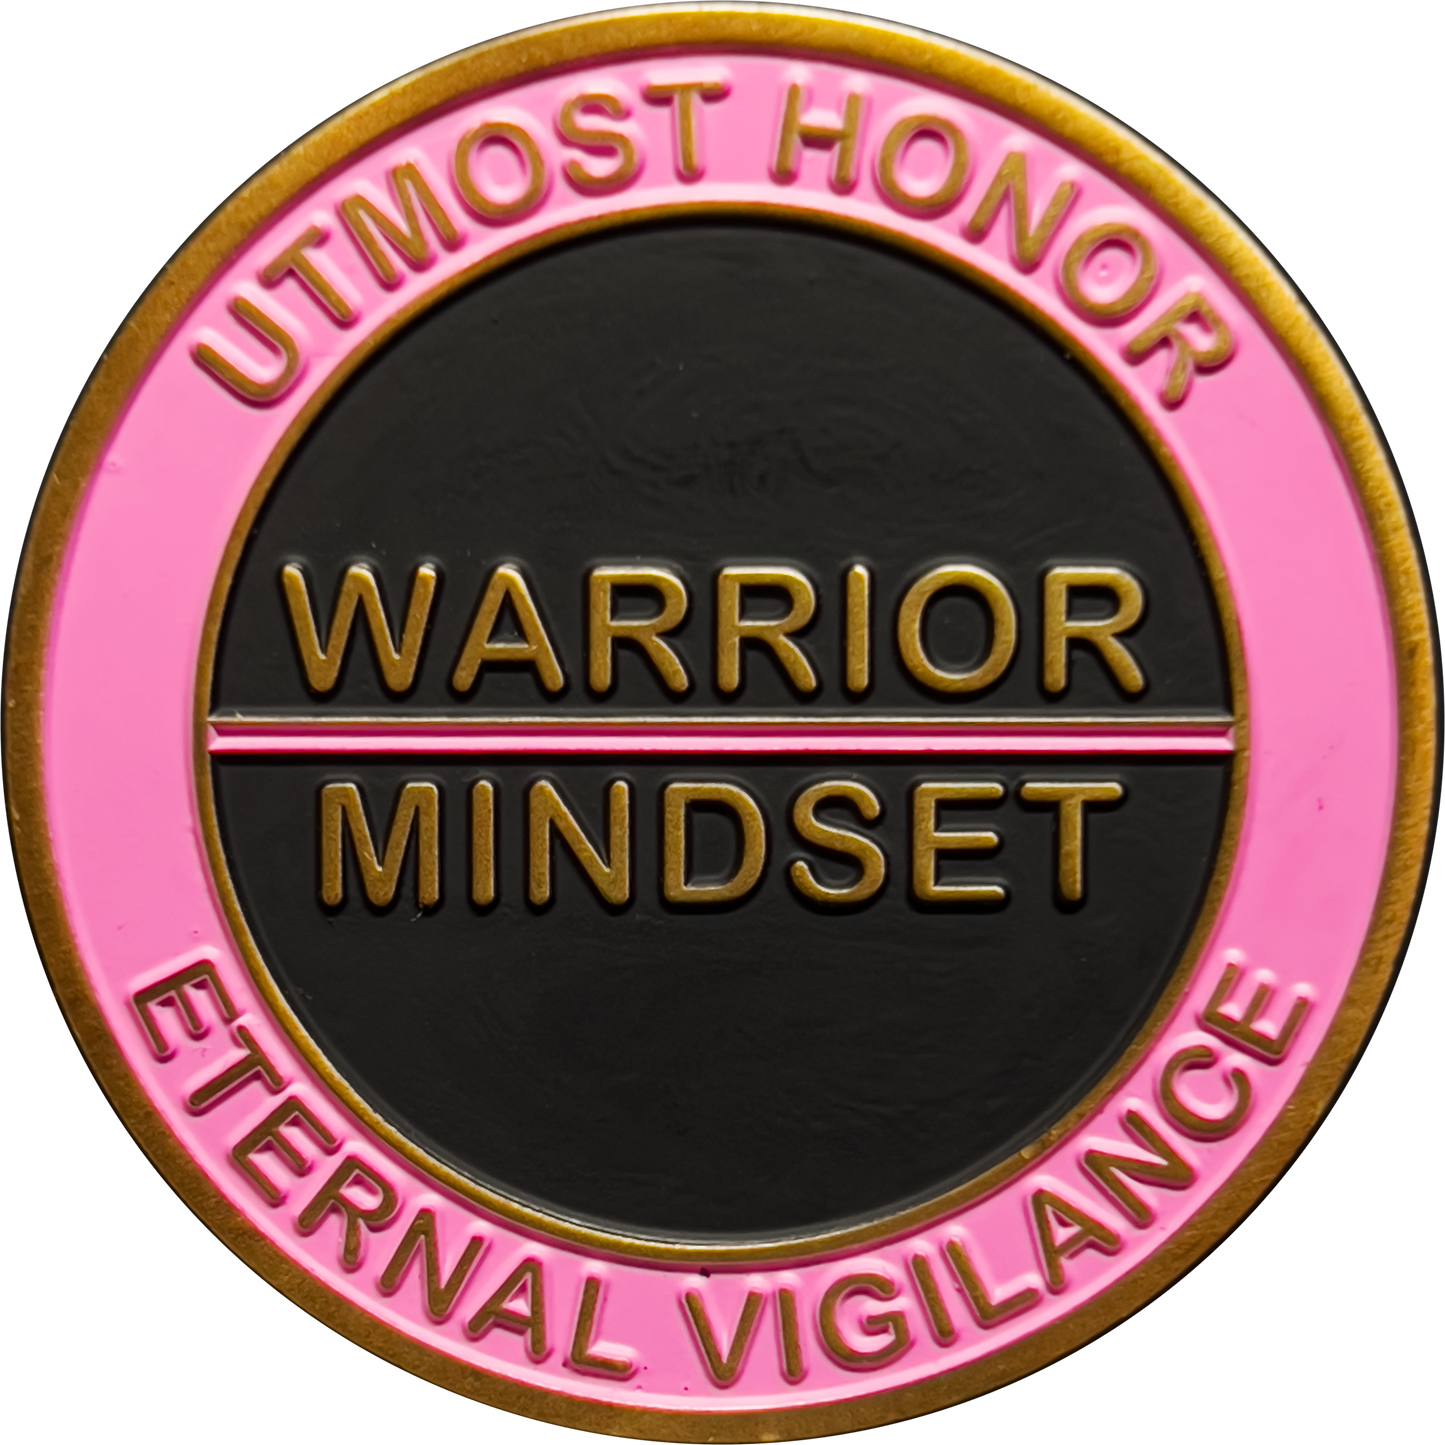 GL8-007 Warrior Mindset Challenge Coin Thin Pink Line Breast Cancer Awareness Survivor Police LAPD NYPD FBI ATF CBP